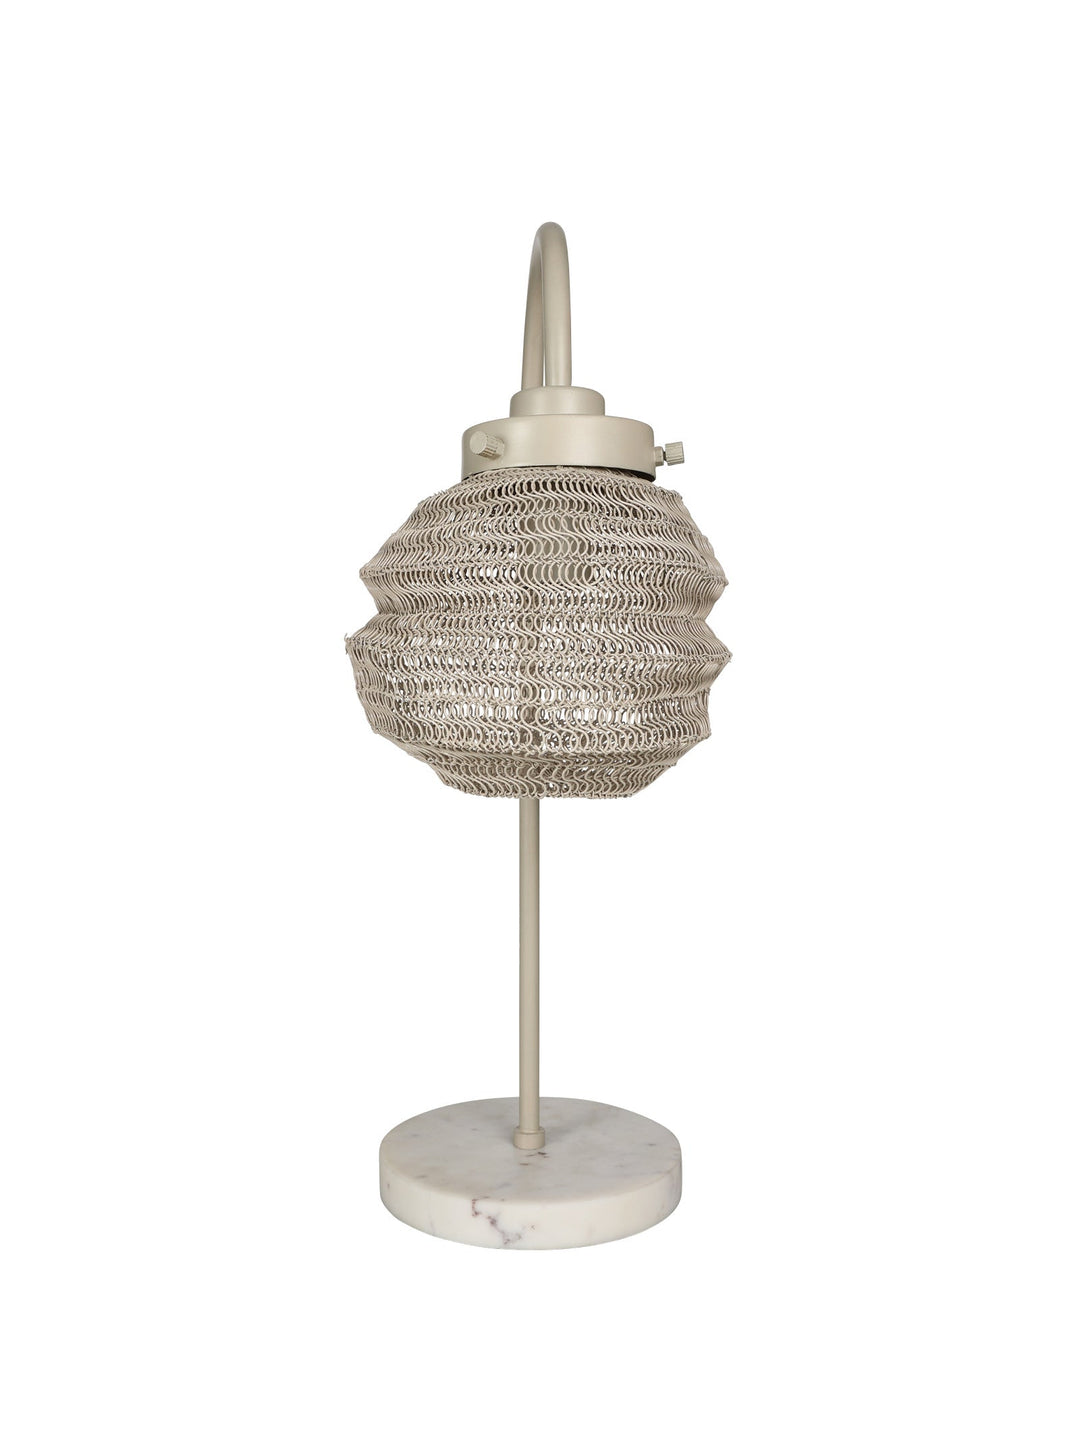 Rookery Bedside Lamp in Sandpiper - lamp- Hertex Haus Online - Decor